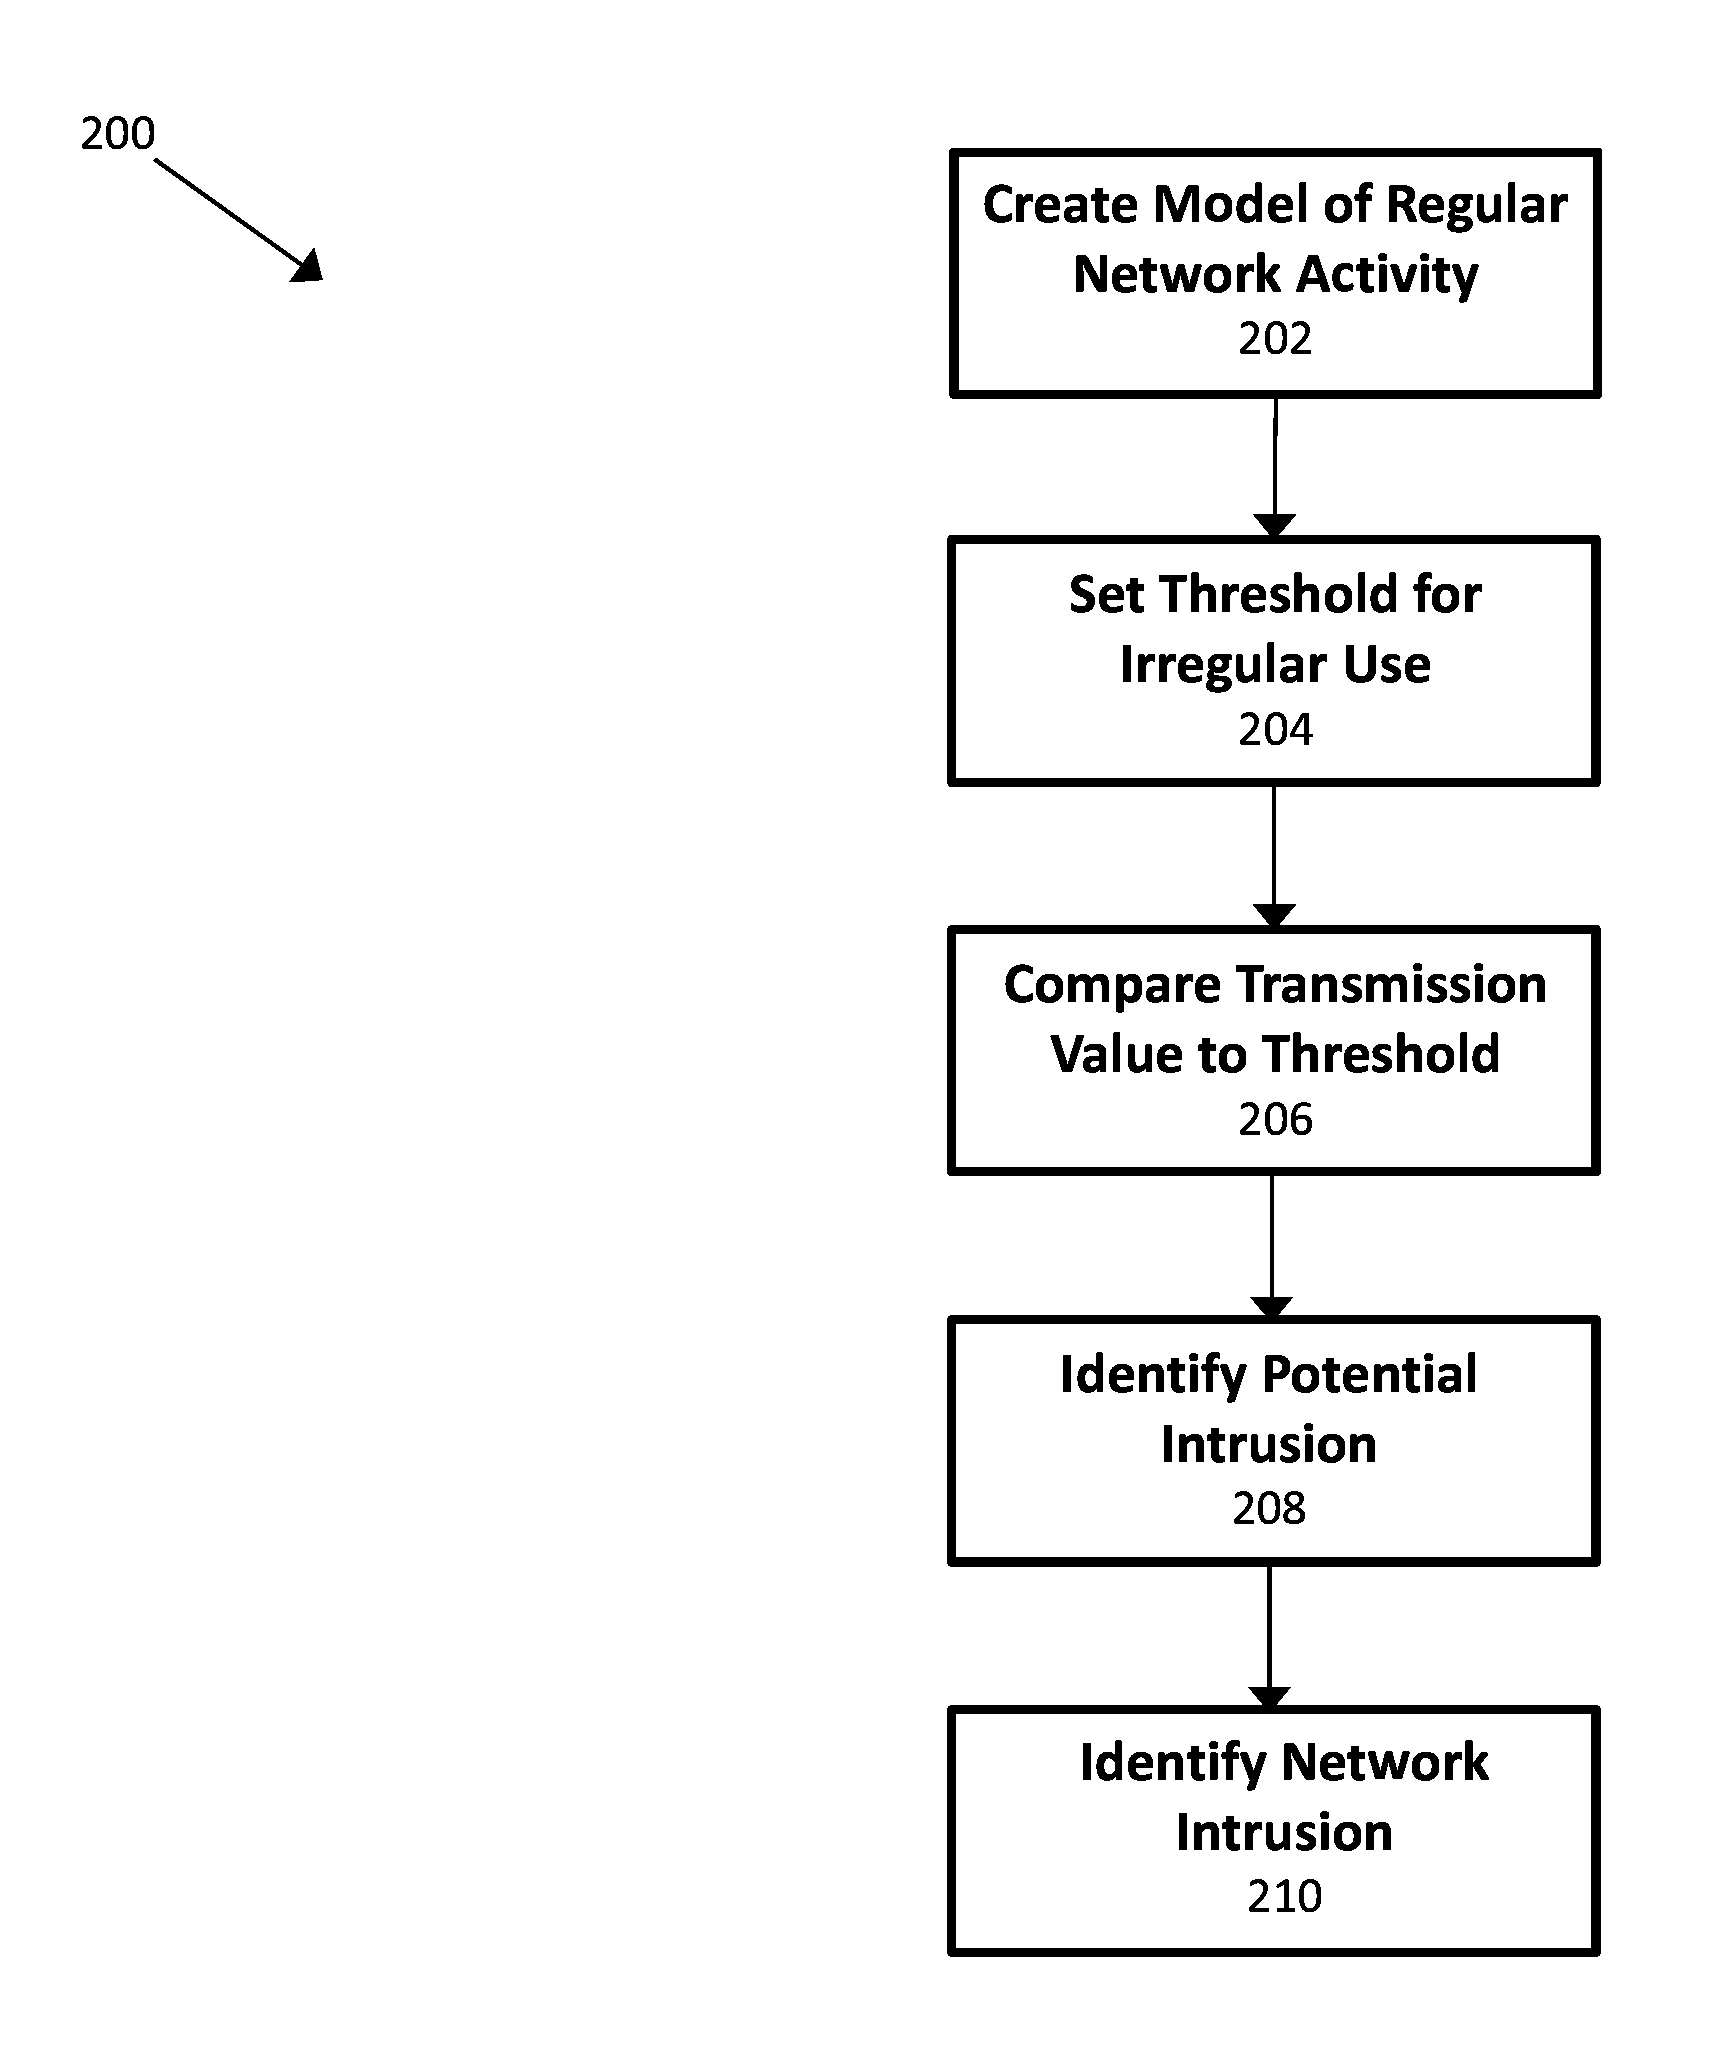 Network intrusion detection